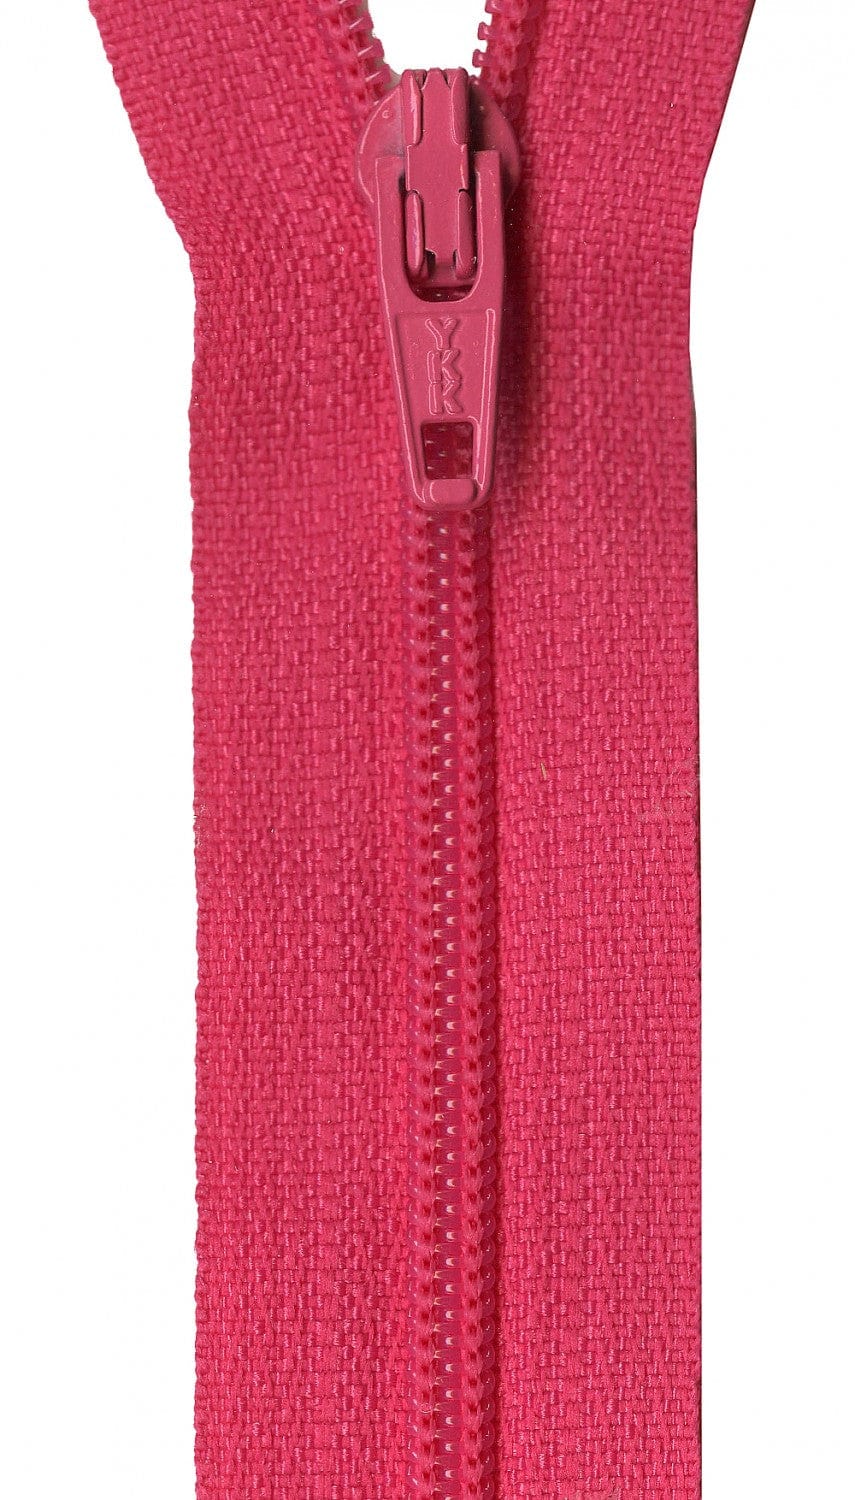 Ziplon Regular Zipper in American Beauty